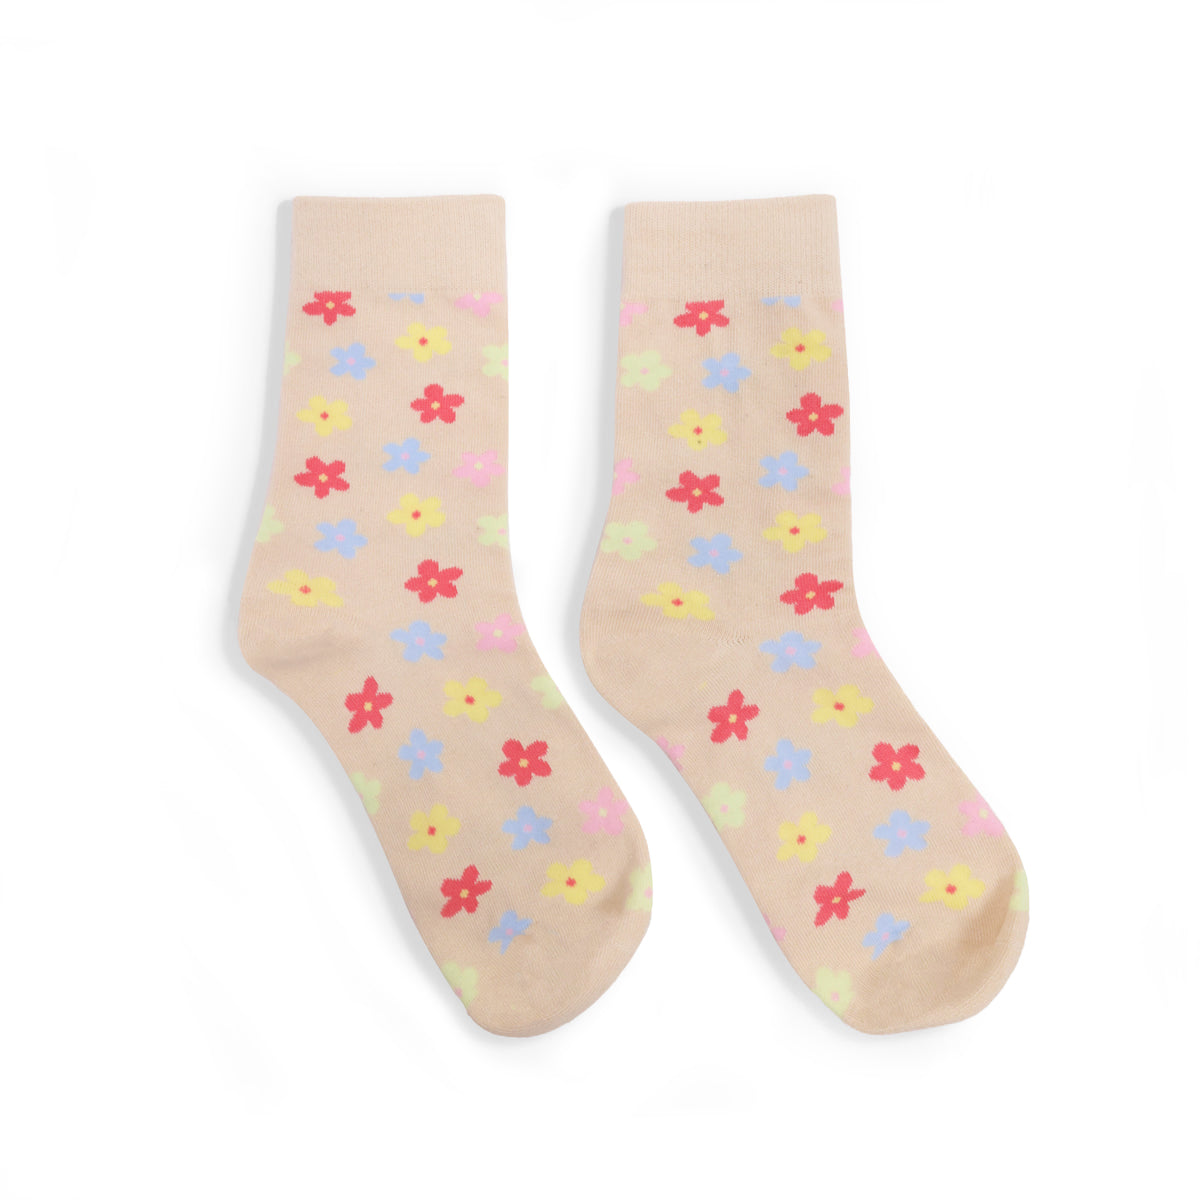 Free Spirit Flower Socks - Accessories - KOI Footwear - Beige - Front View